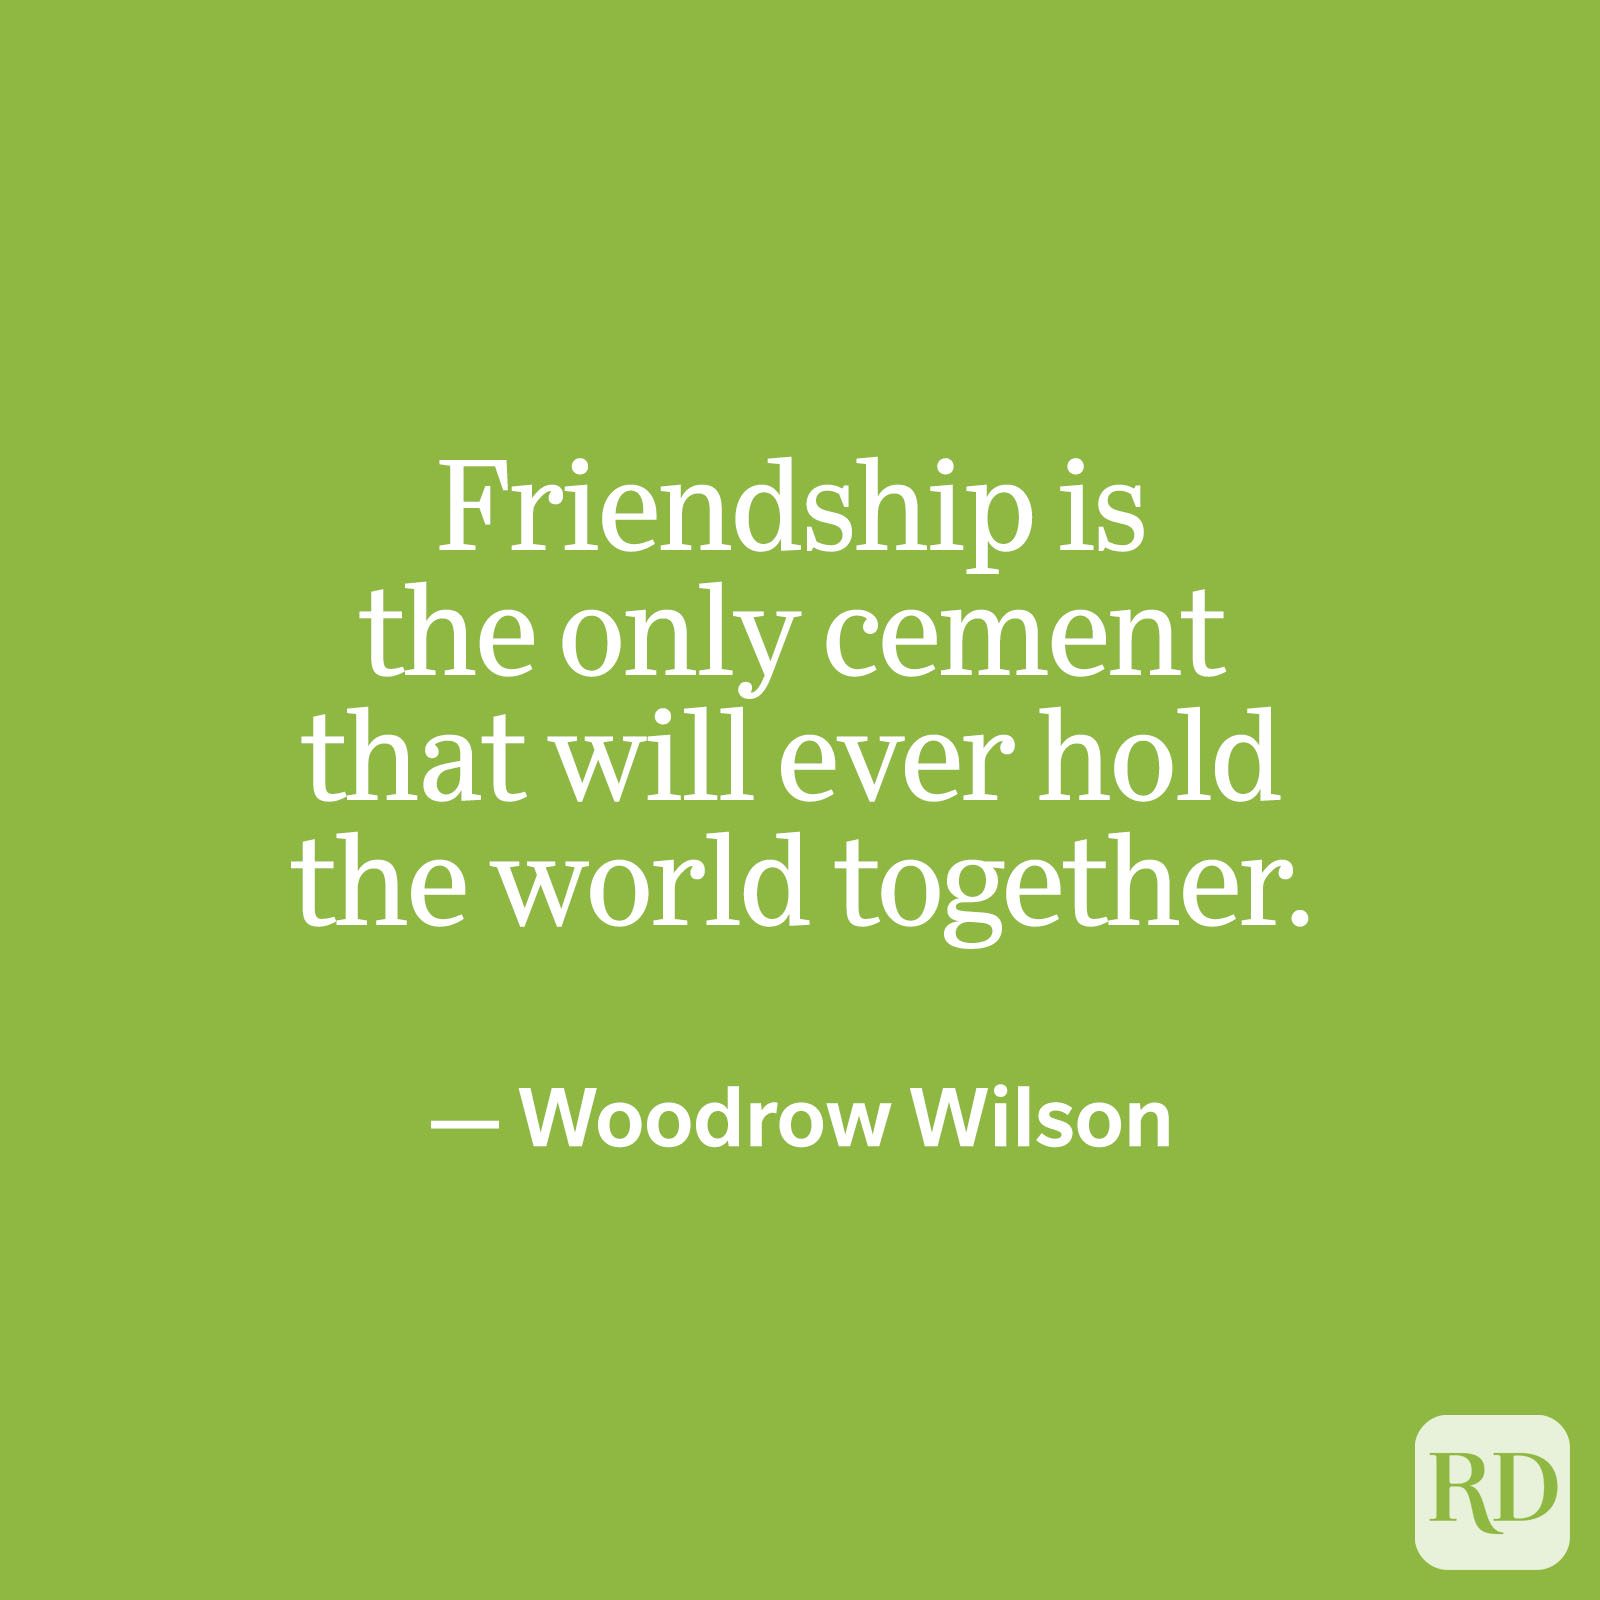 Woodrow Wilson friendship quote